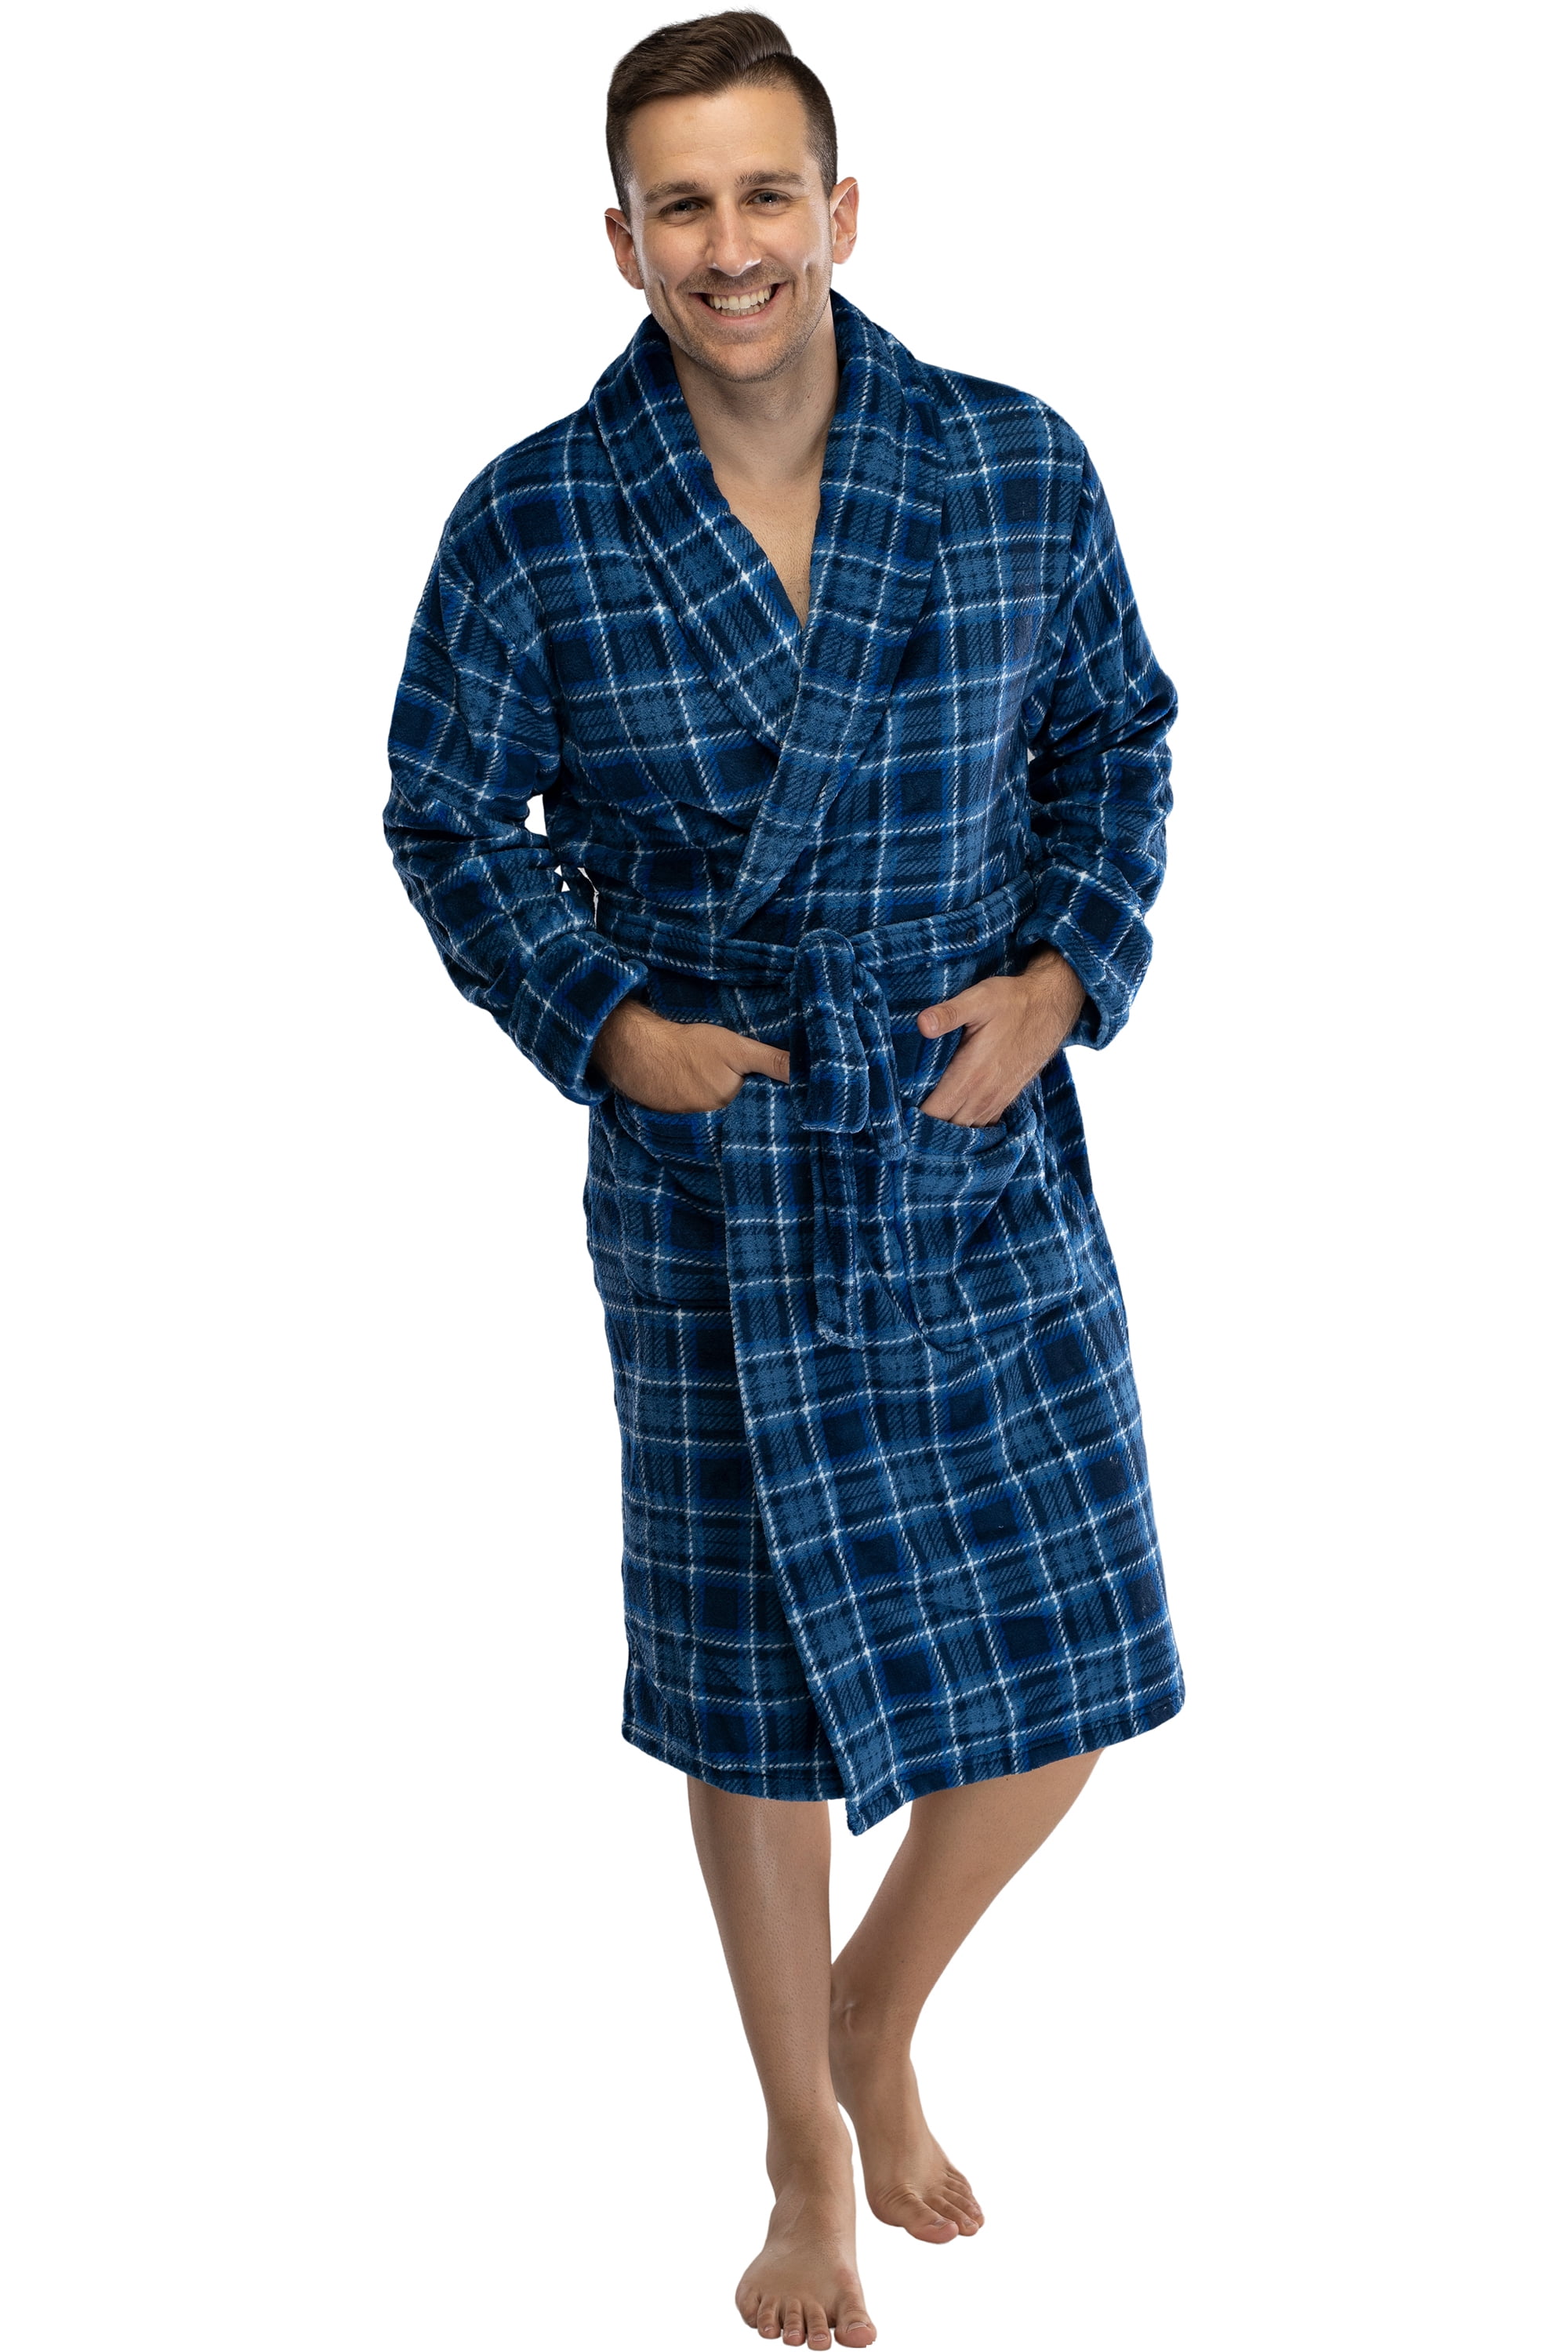 Mens Plush Green & Blue Plaid Fleece Robe House Coat Bathrobe Small/Medium 